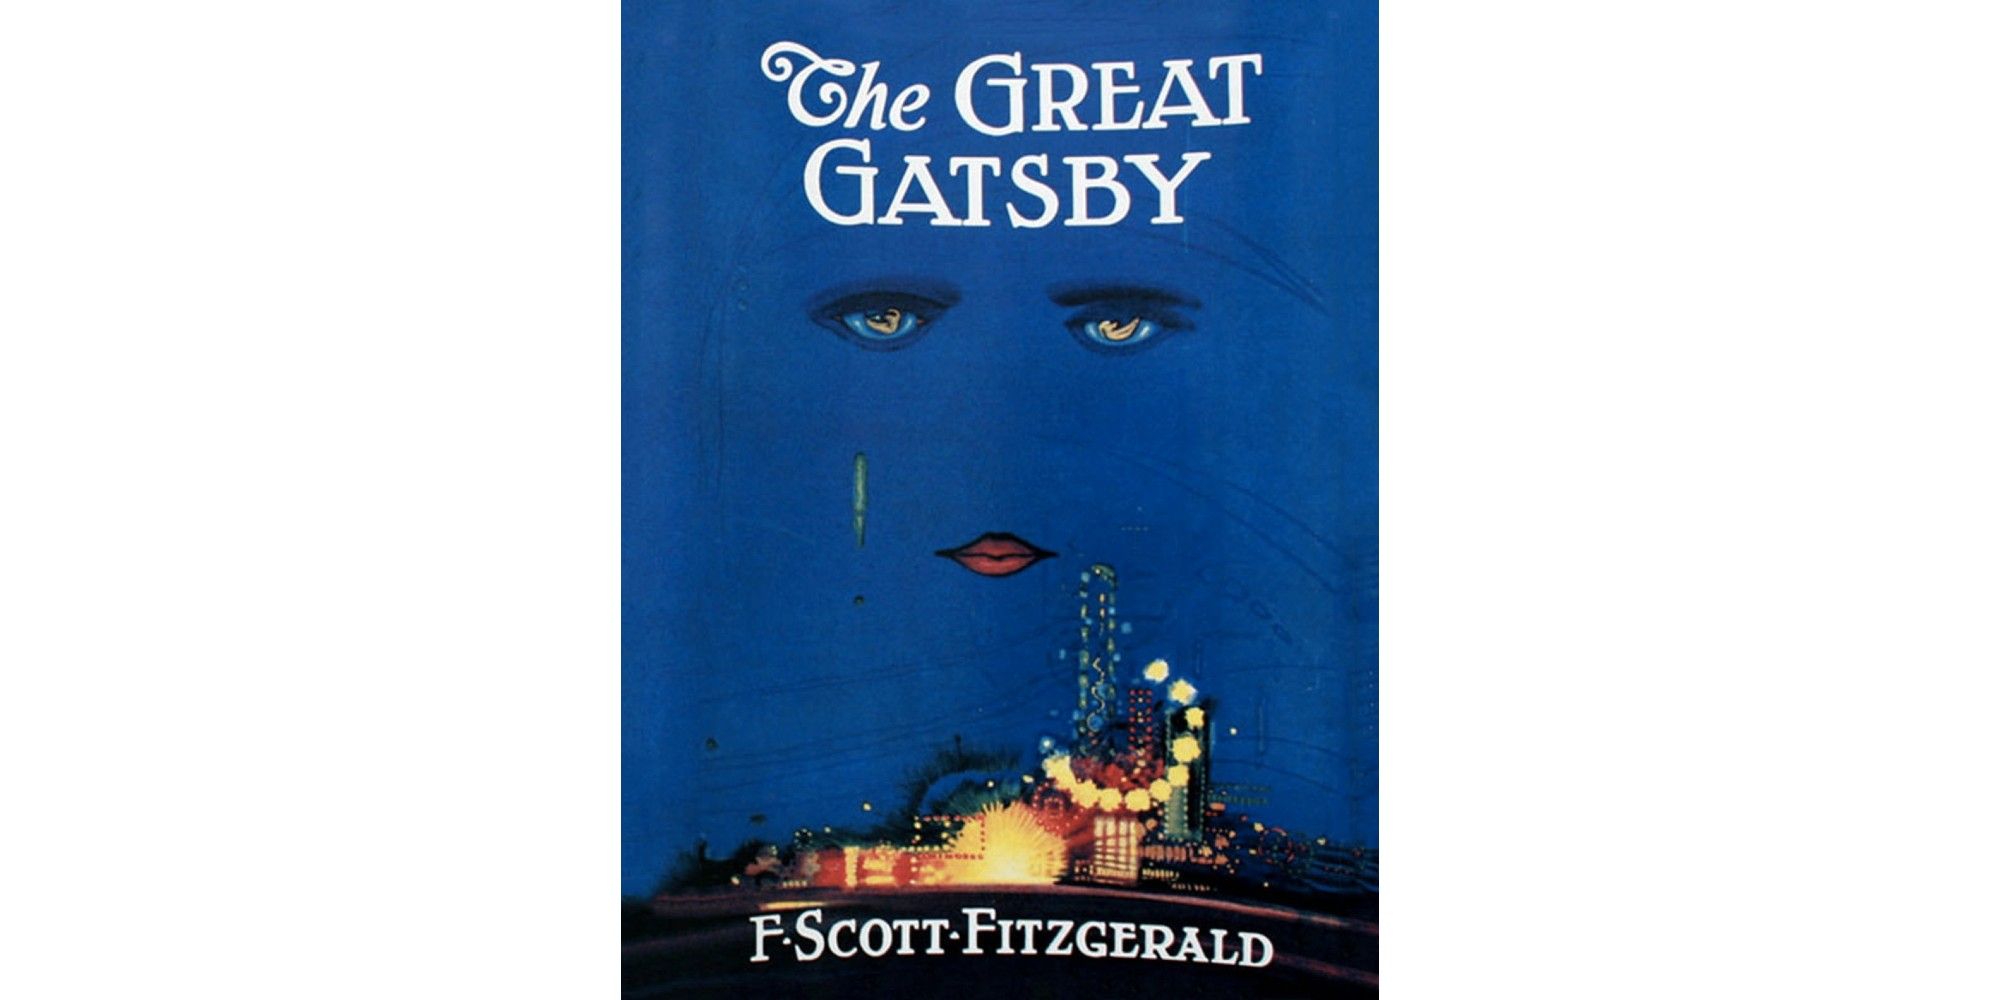 The Great Gatsby by F Scott. Fitzgerald